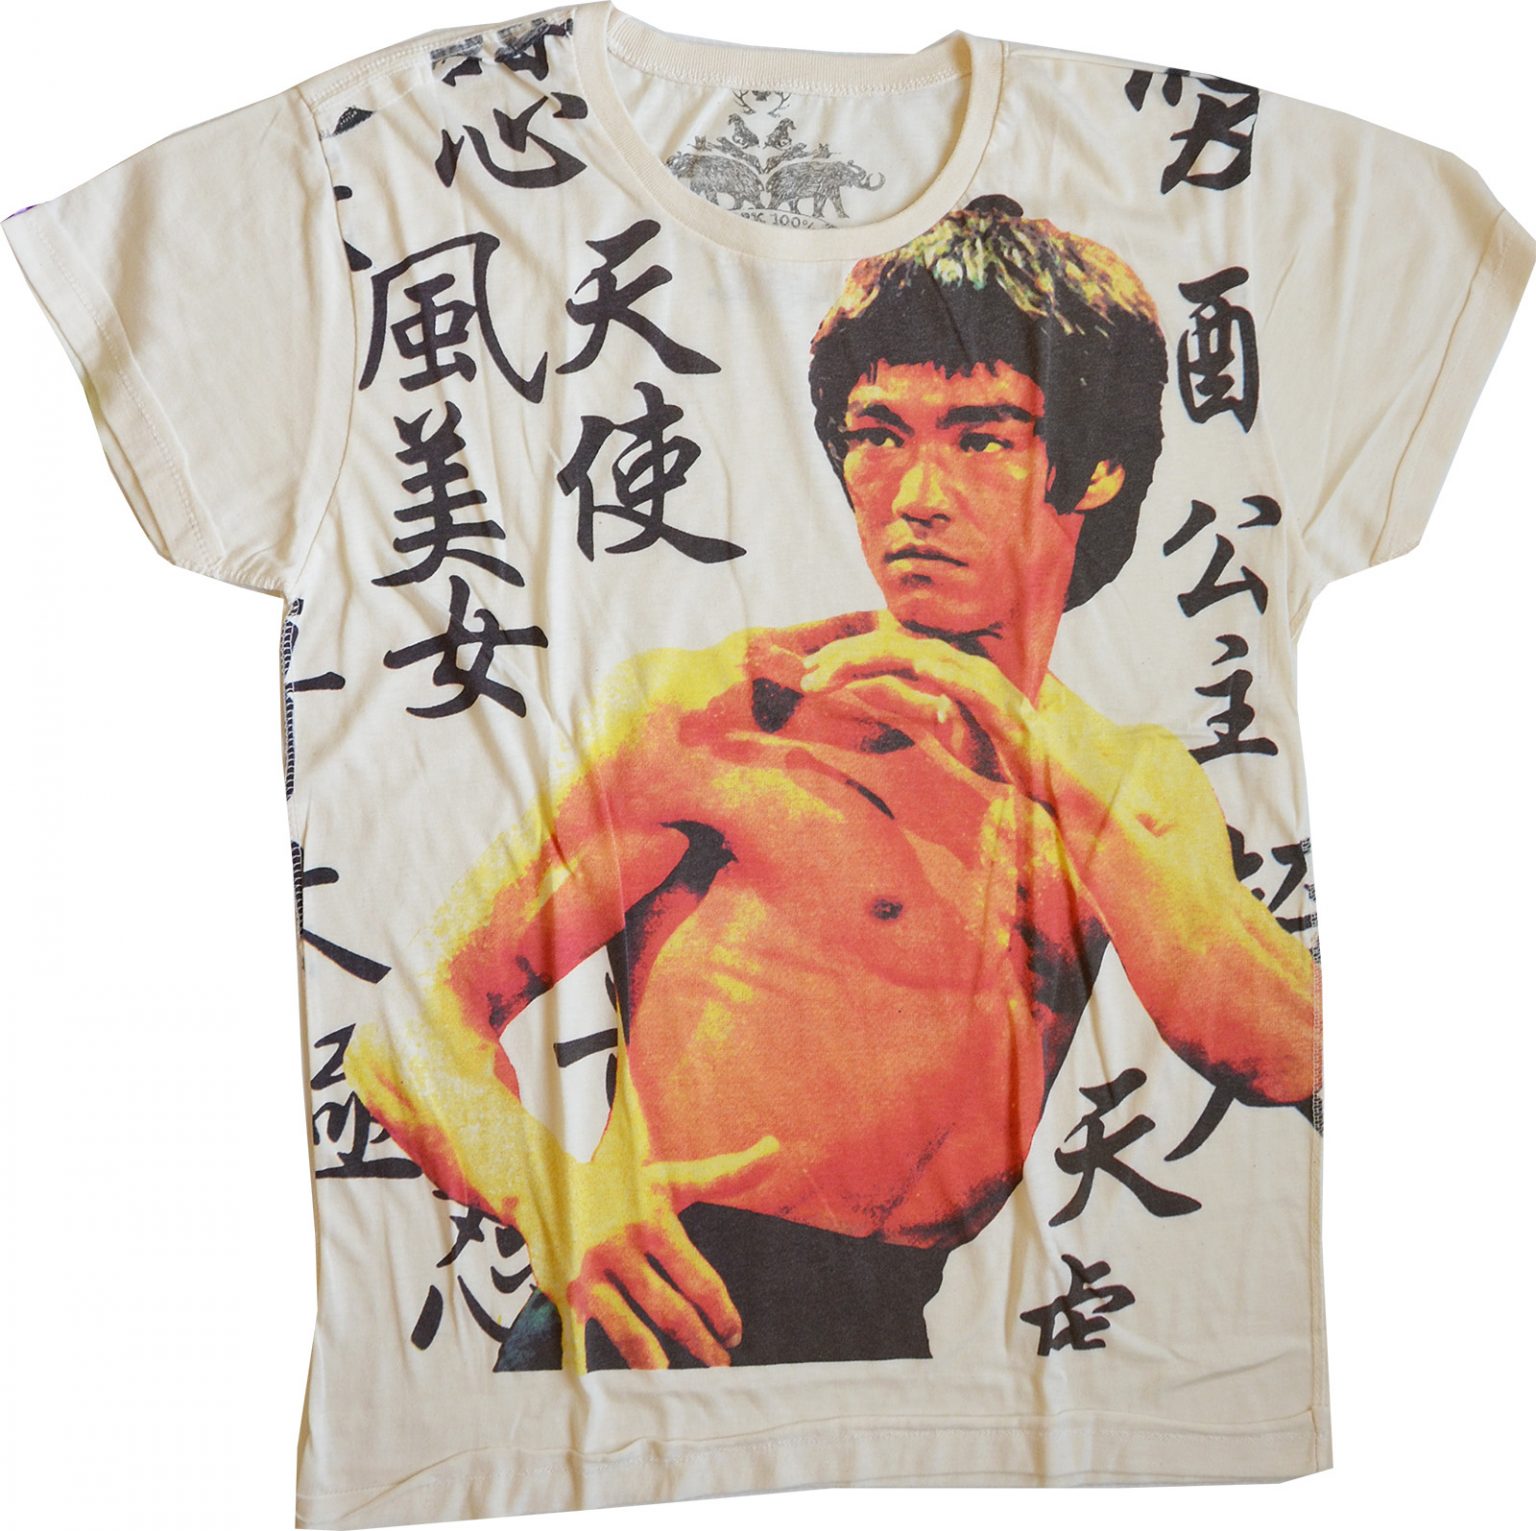 Tshirt Bruce Lee Jun Fan - Cotton Size M, L, XL Unisex Regular fit